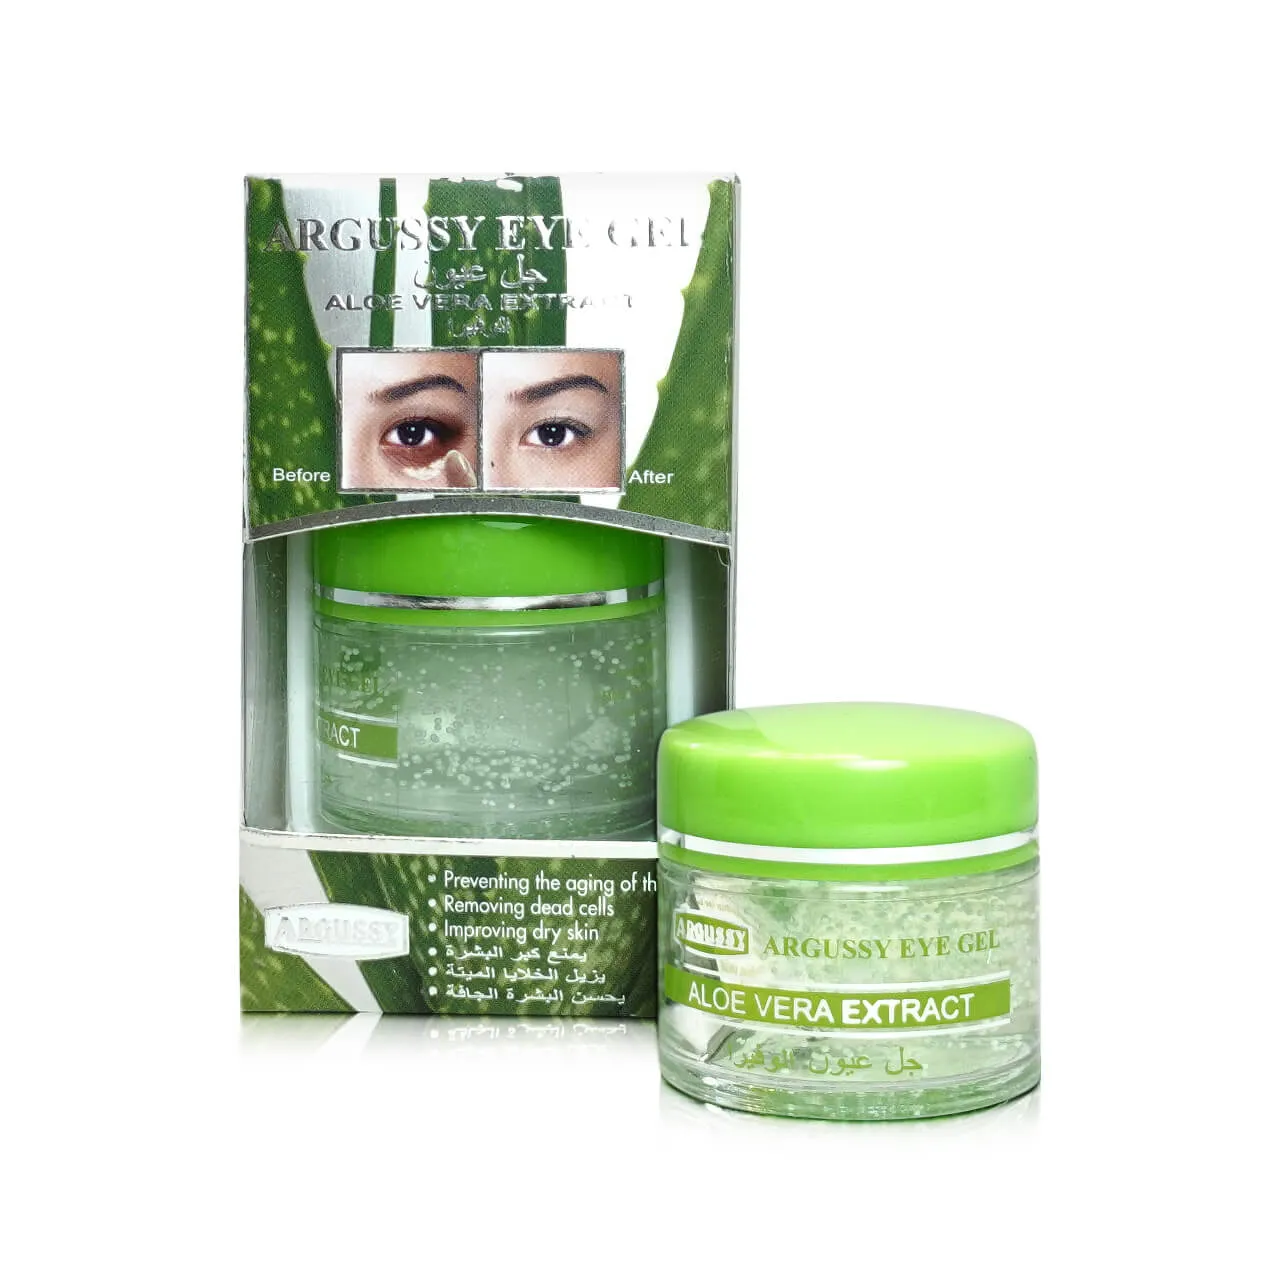 Argussy Eye Gel with Aloe Vera Extract 20g